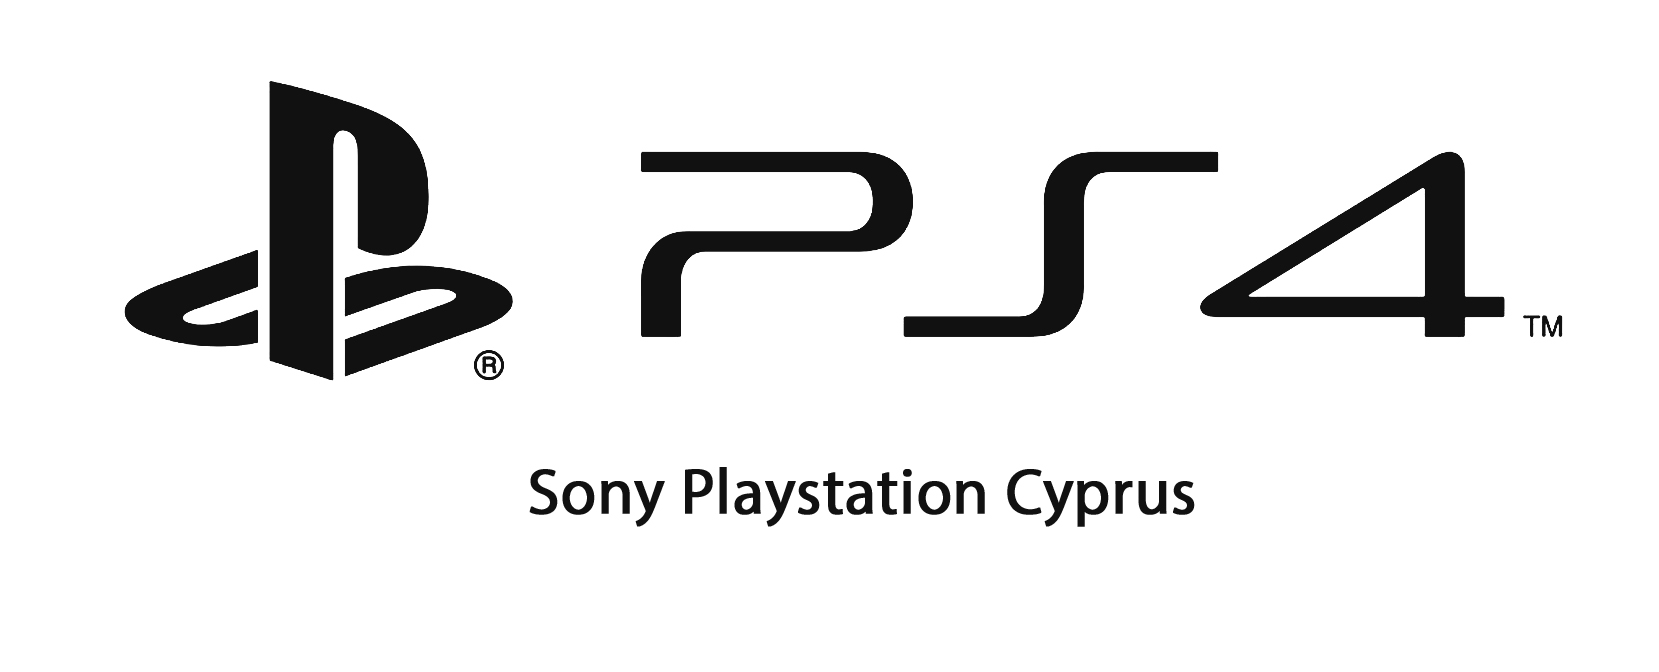 Ps5 какой регион. Sony ps3 logo. Логотип плейстейшен 4. PLAYSTATION надпись. Ps5 значок.